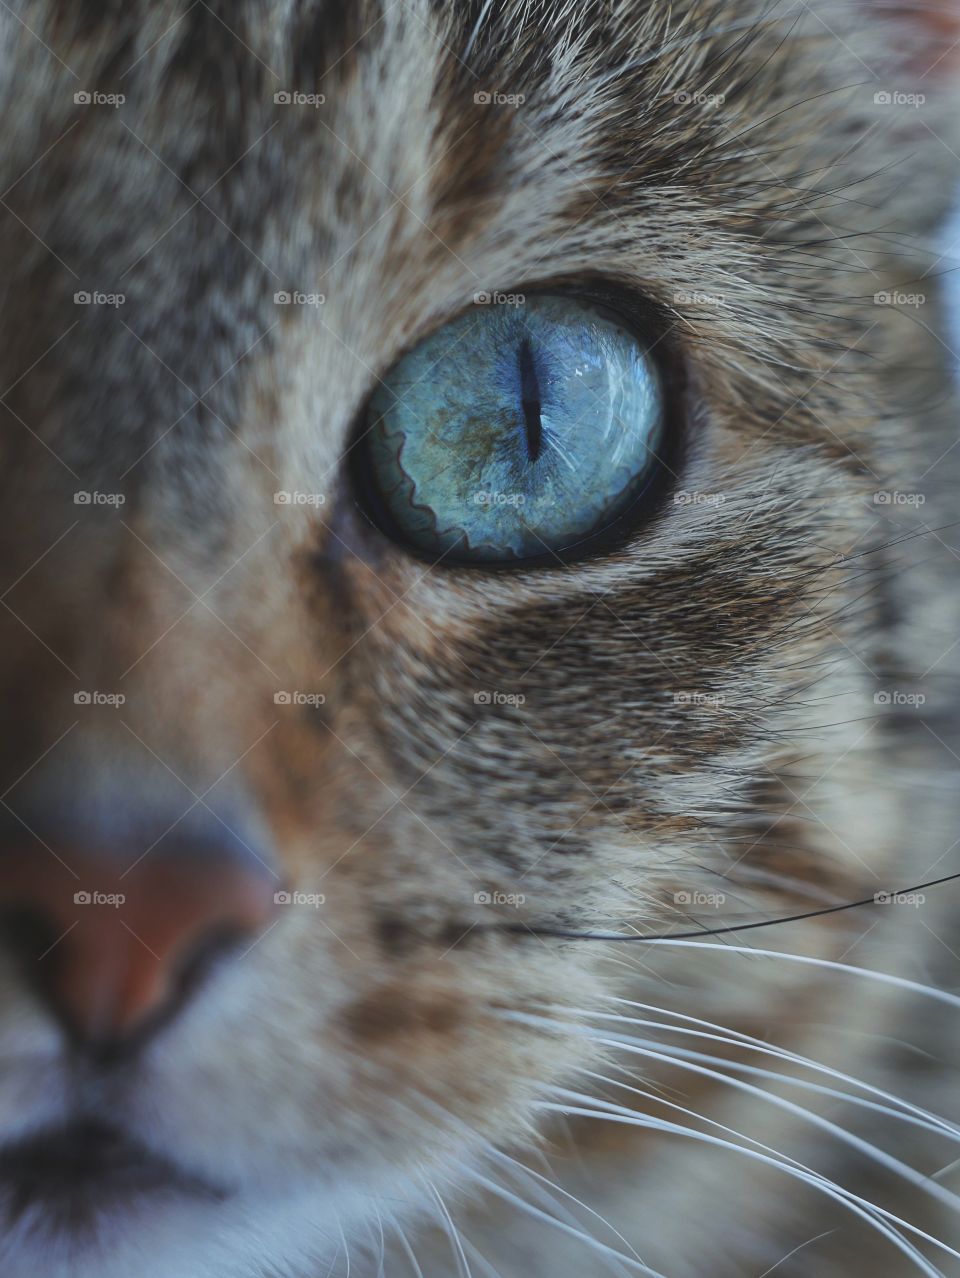 Magic cat eye